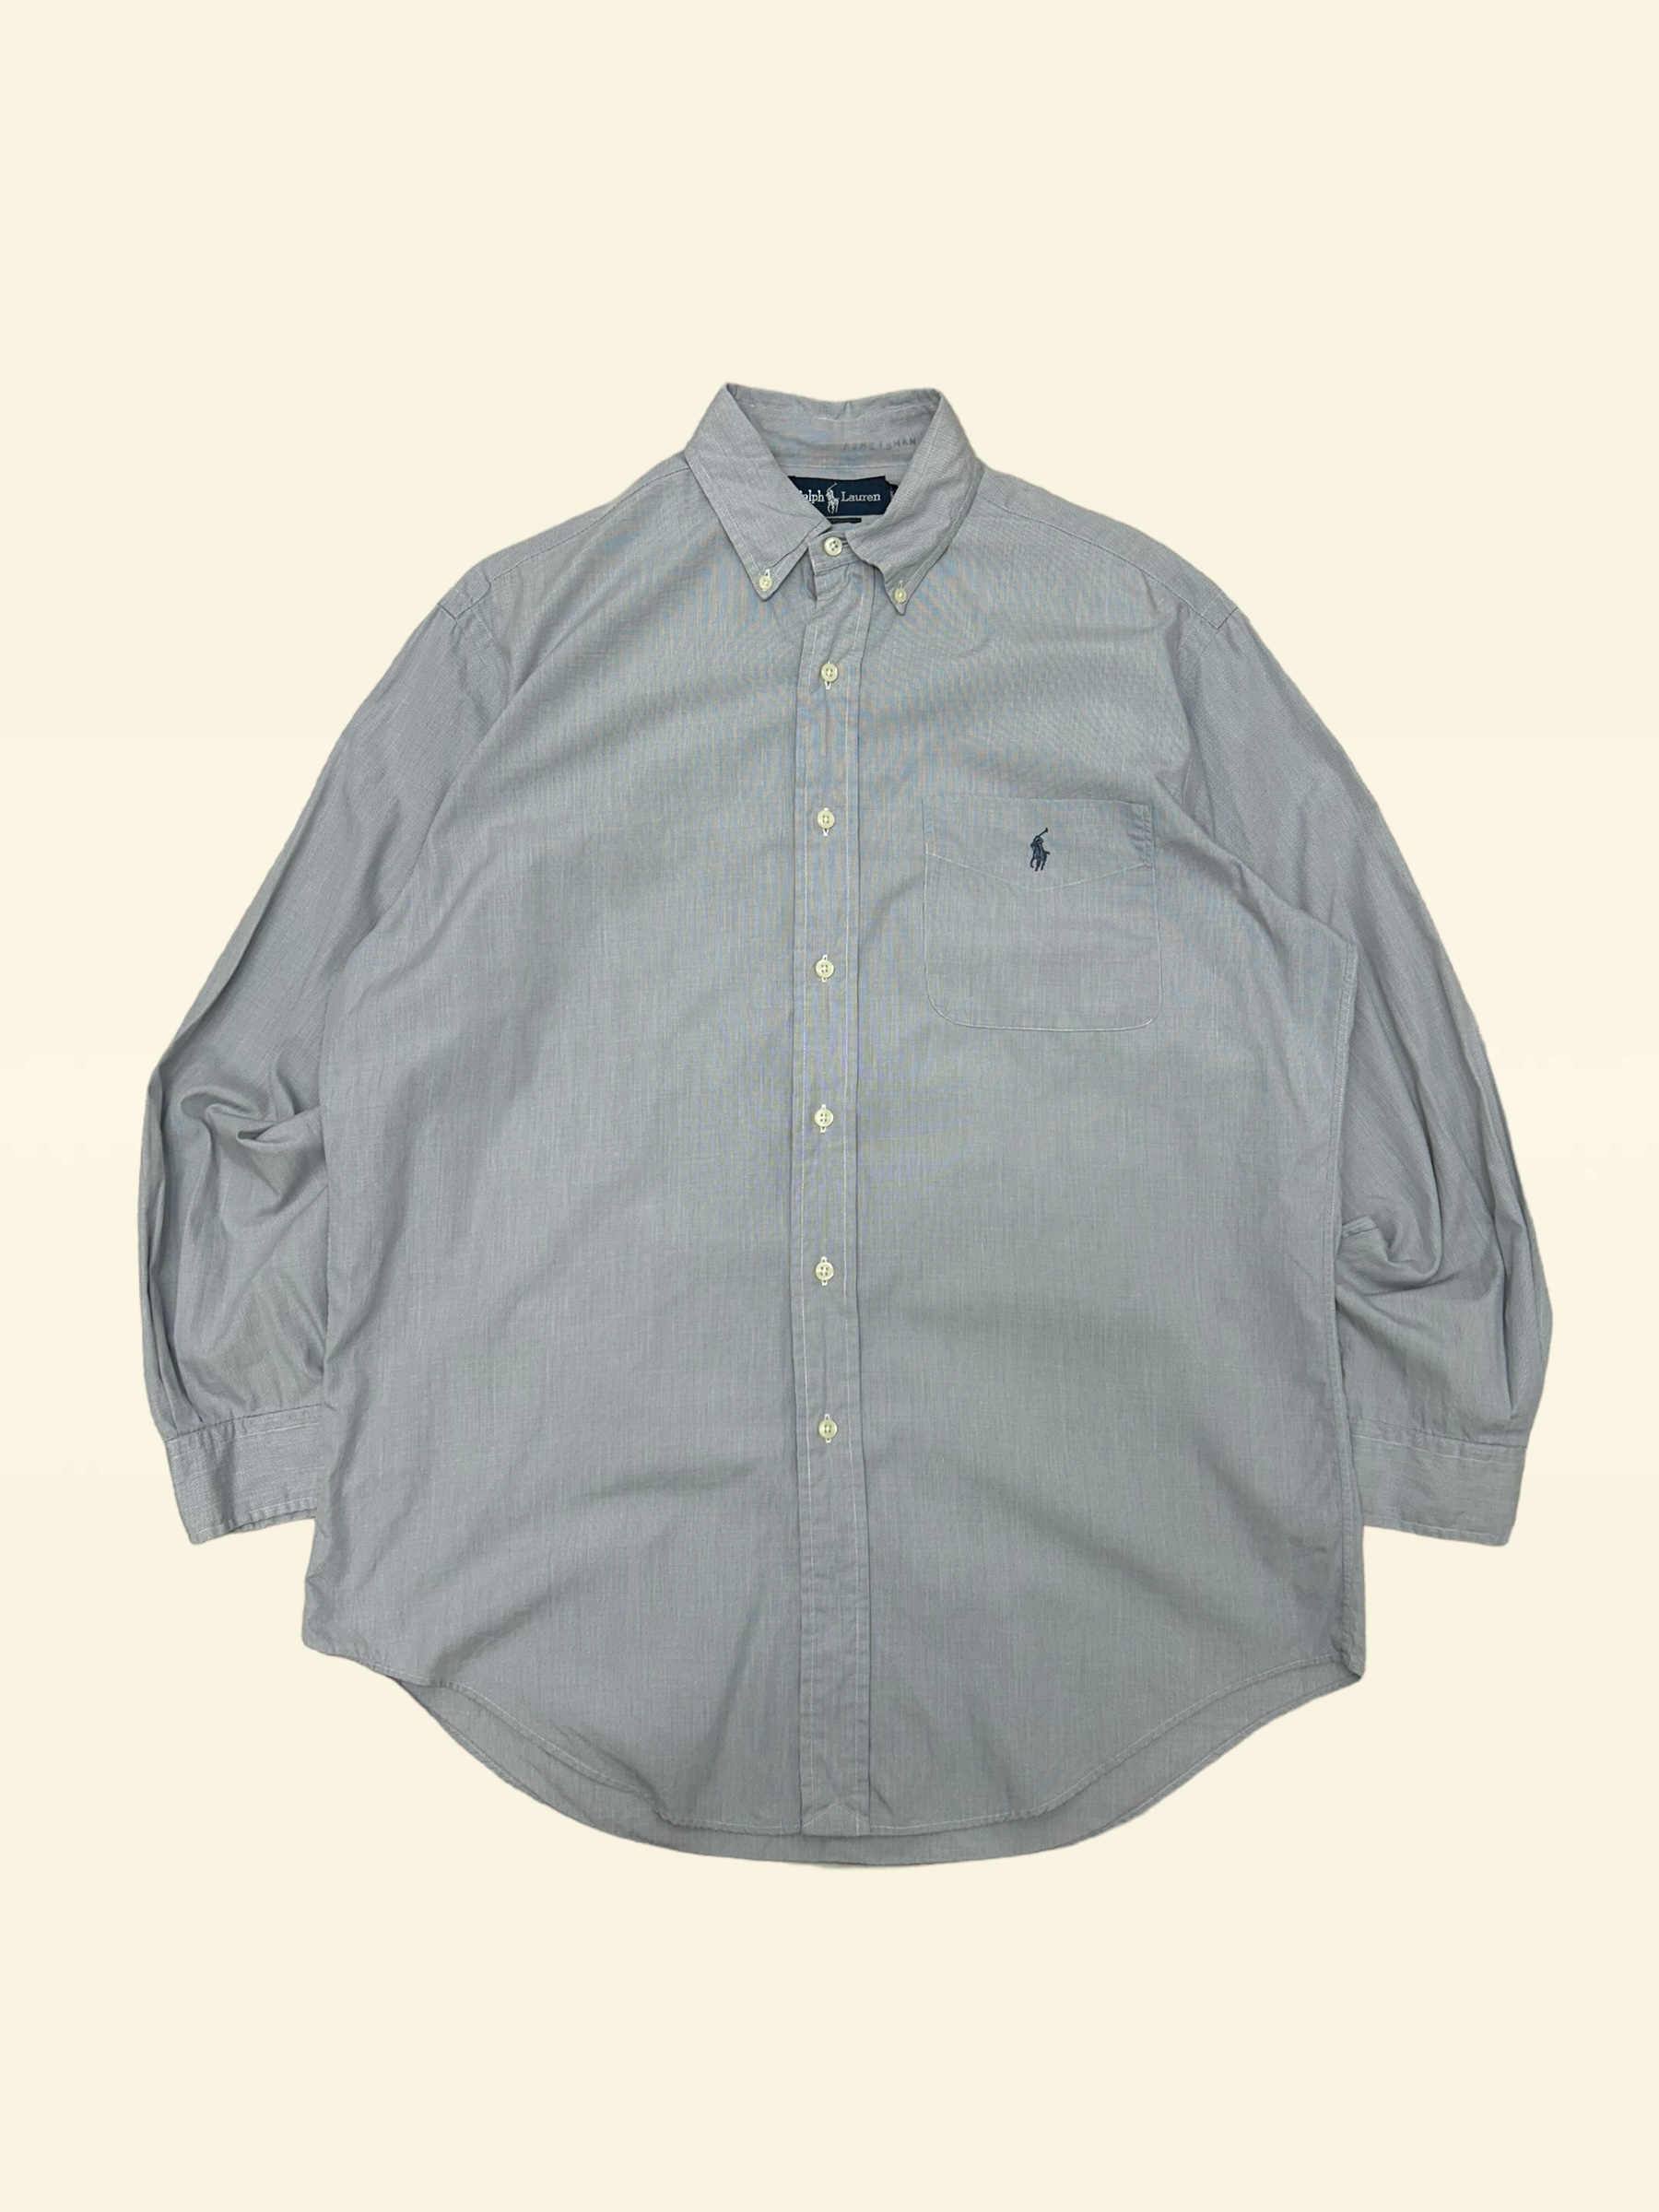 (From USA)Polo ralph lauren gray pocket popline shirt 15.5